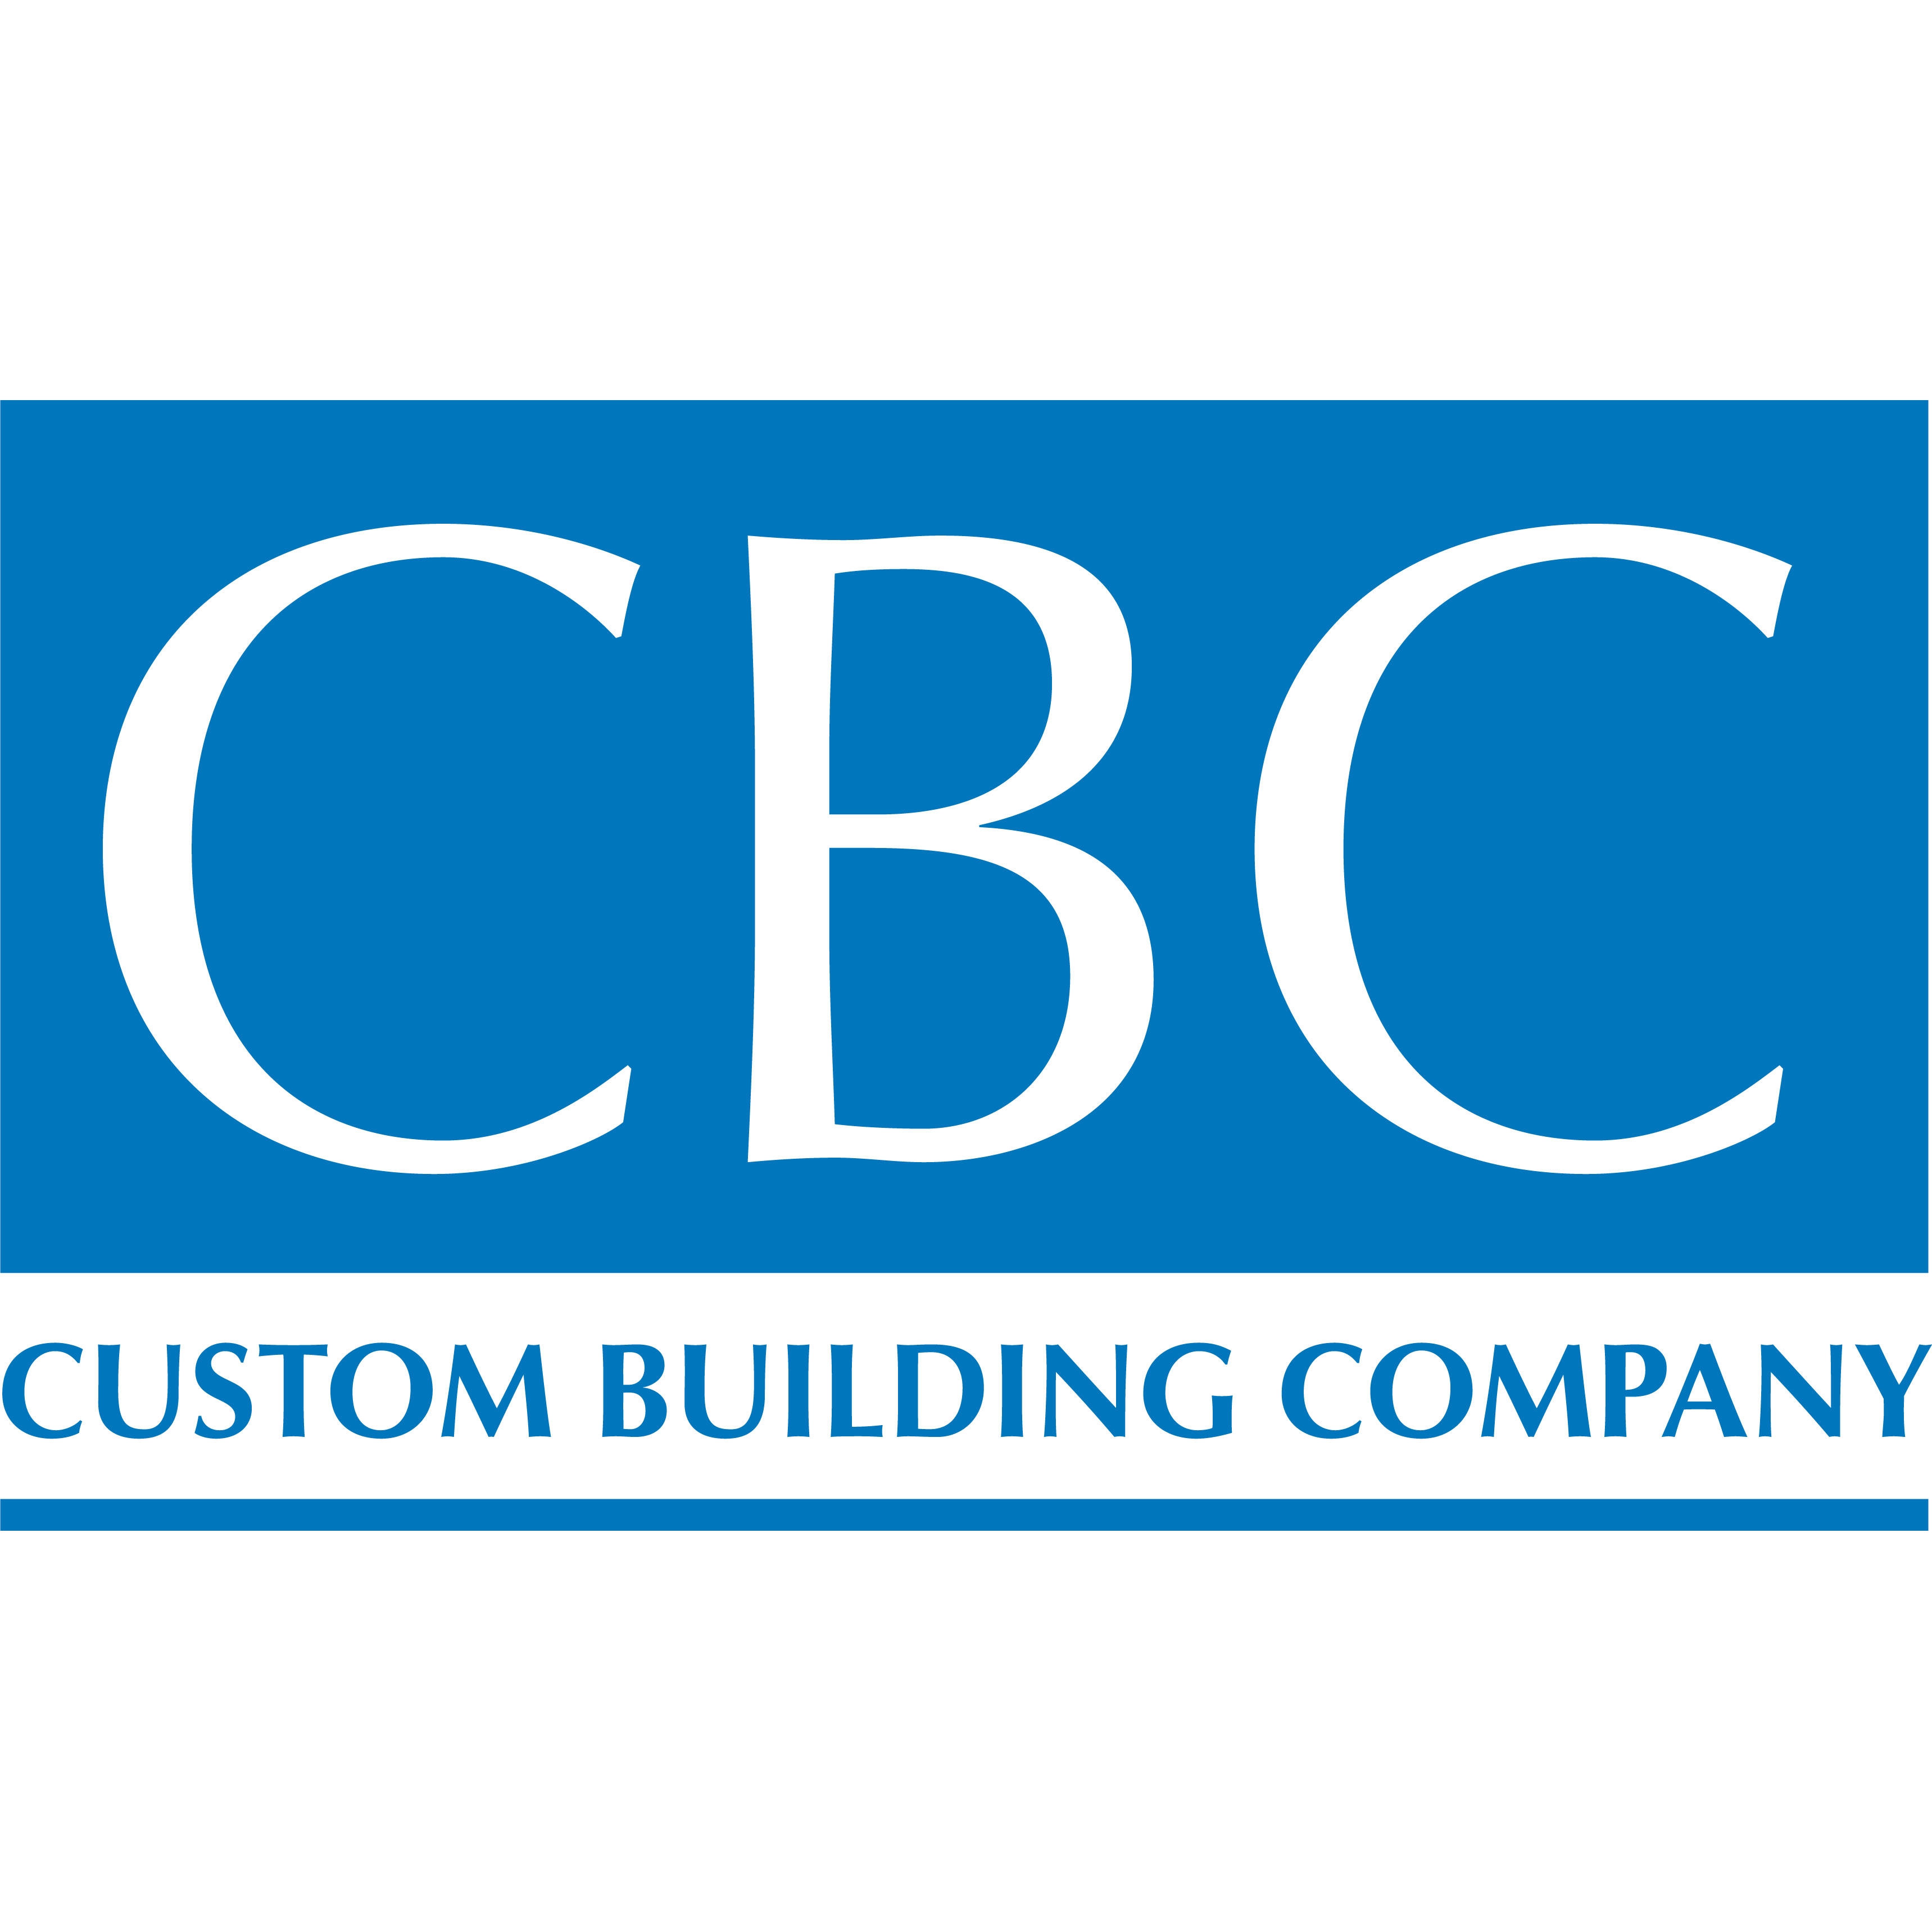 Custom Building Company - Greenville, NC 27834 - (252)752-4220 | ShowMeLocal.com